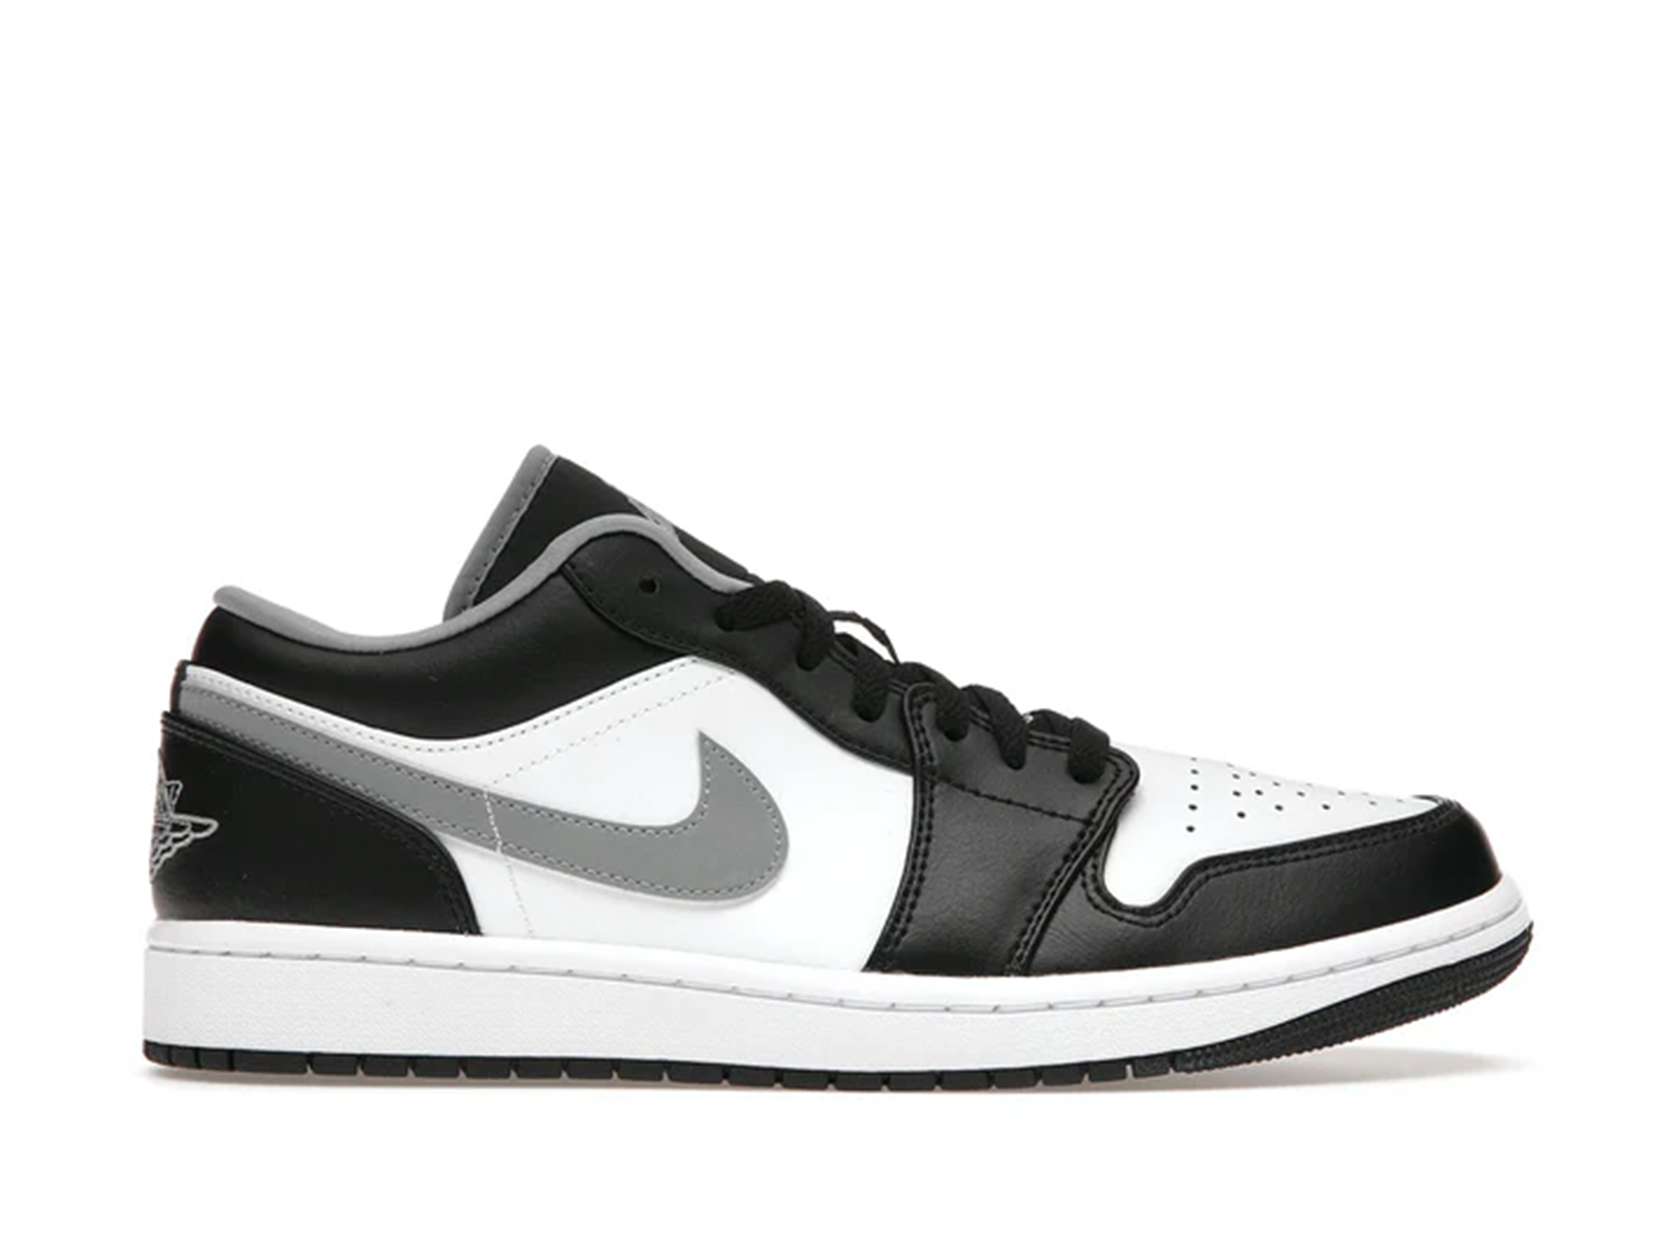 Nike Air Jordan 1 Low Black White Grey – Double Boxed